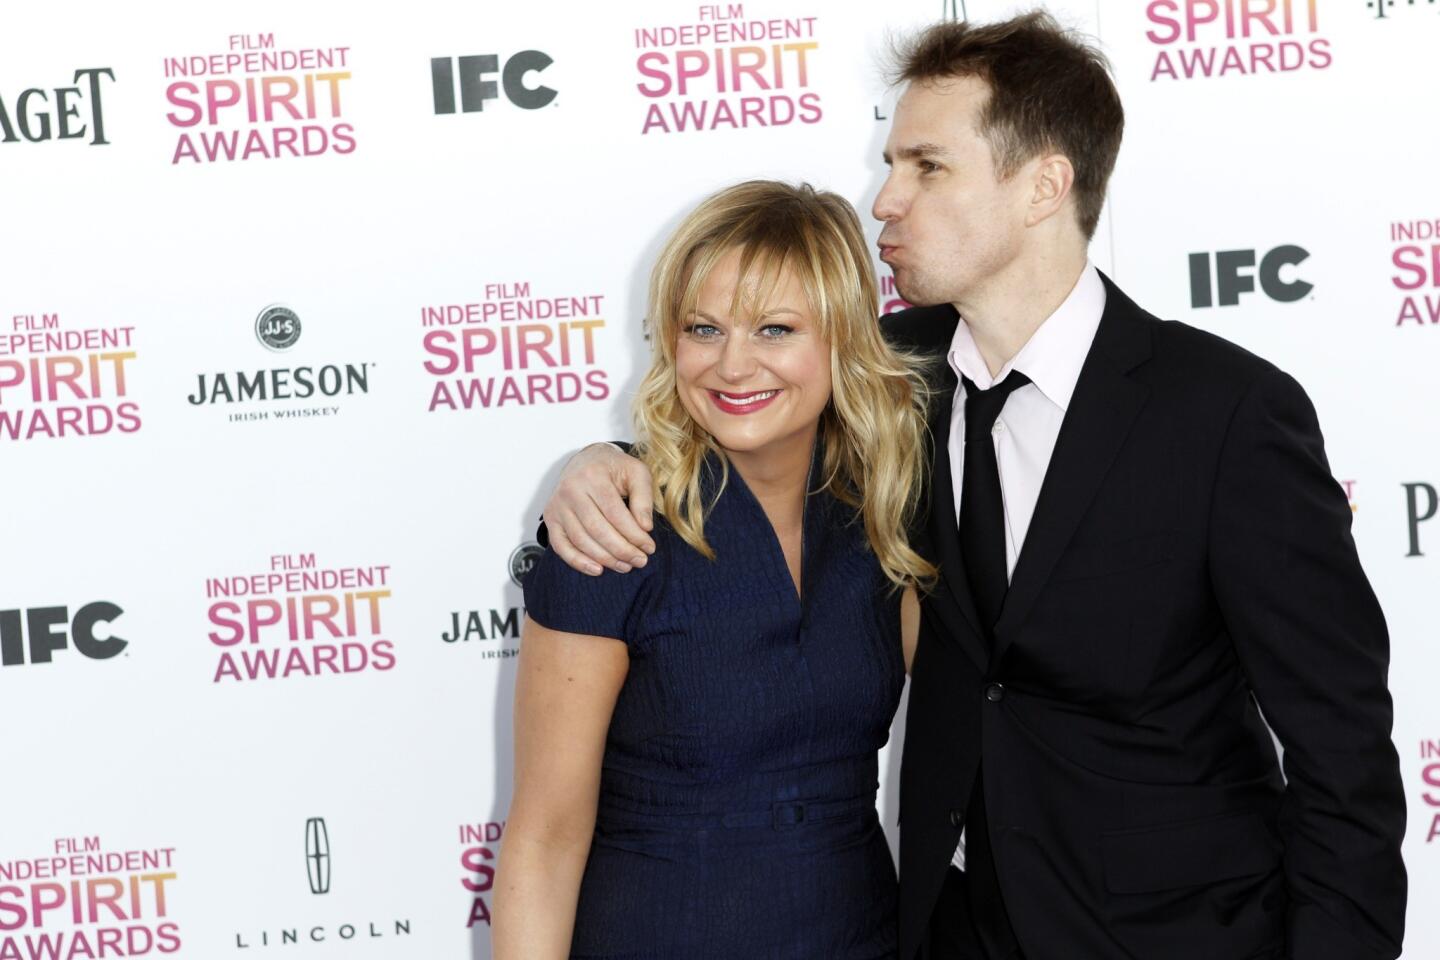 2013 Film Independent Spirit Awards - Red carpert